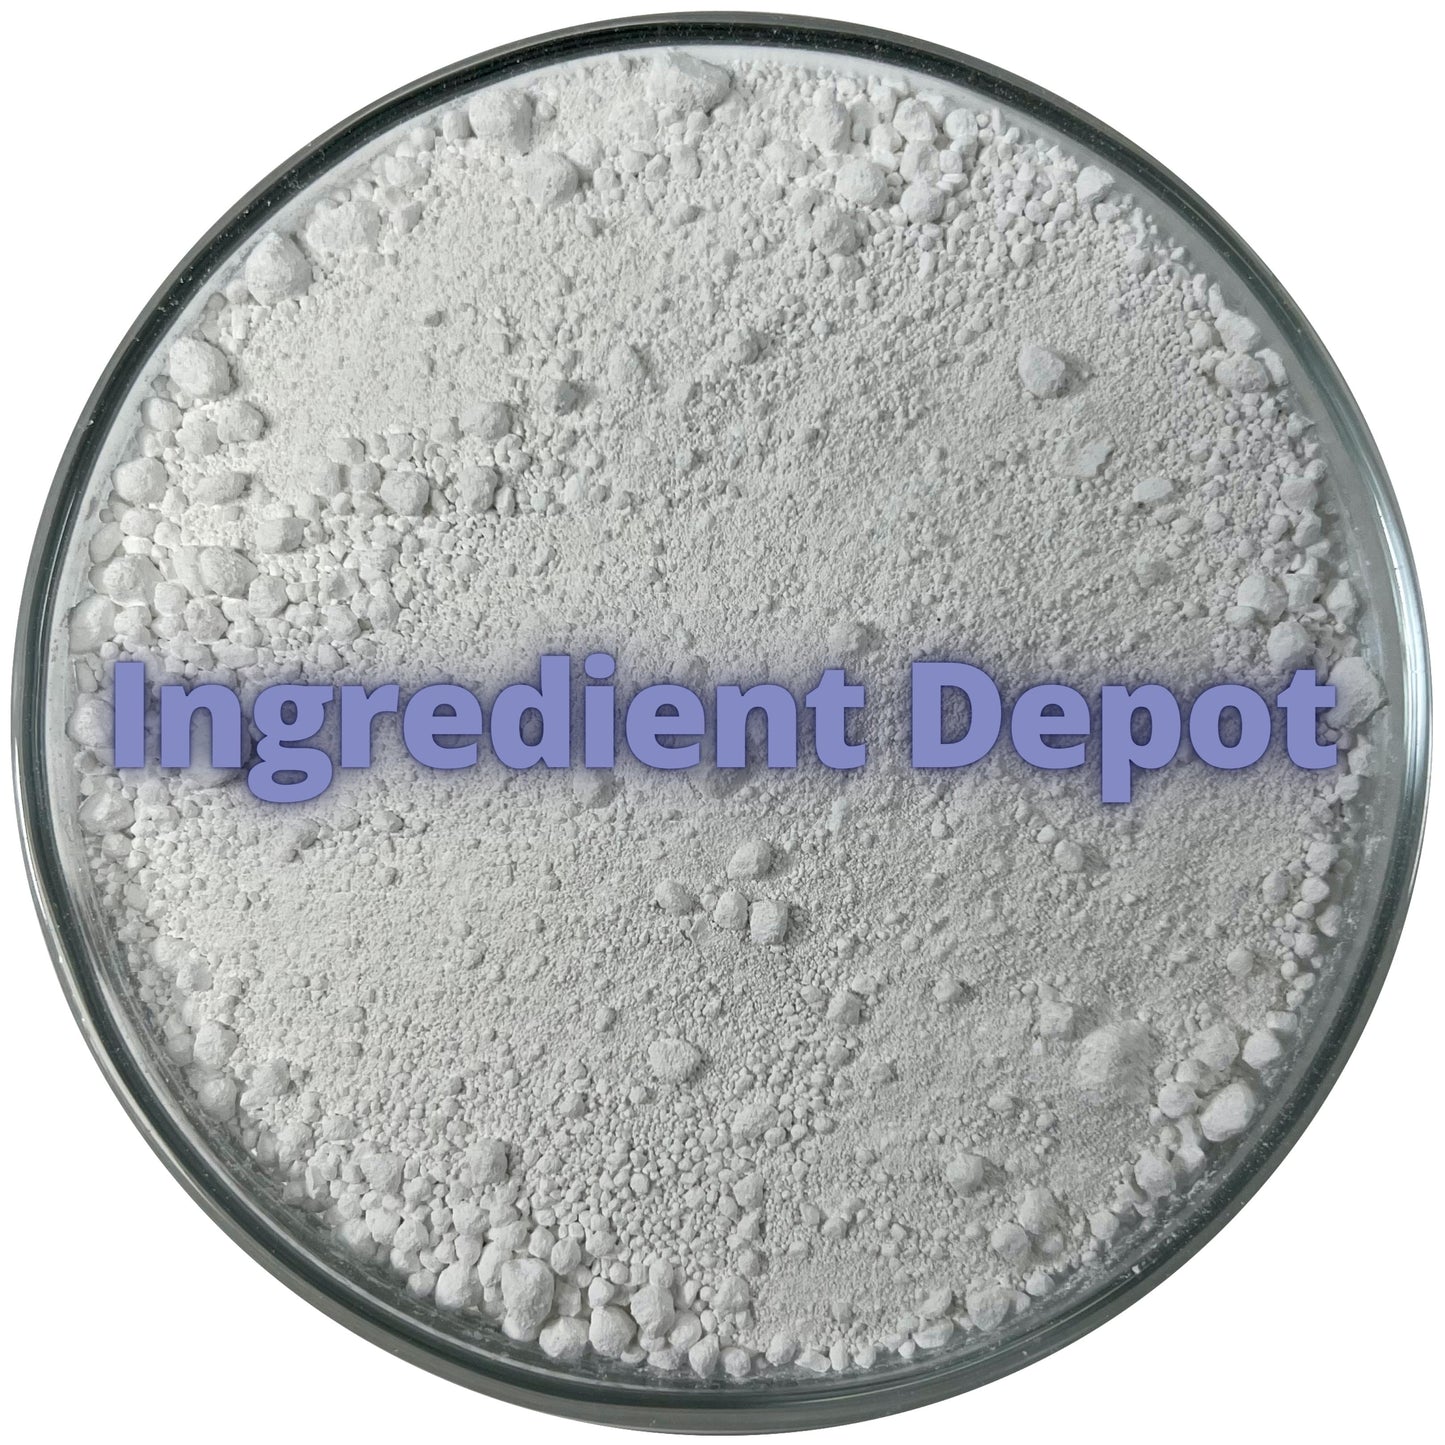 Titanium Dioxide Technical Grade 7 kgs - IngredientDepot.com